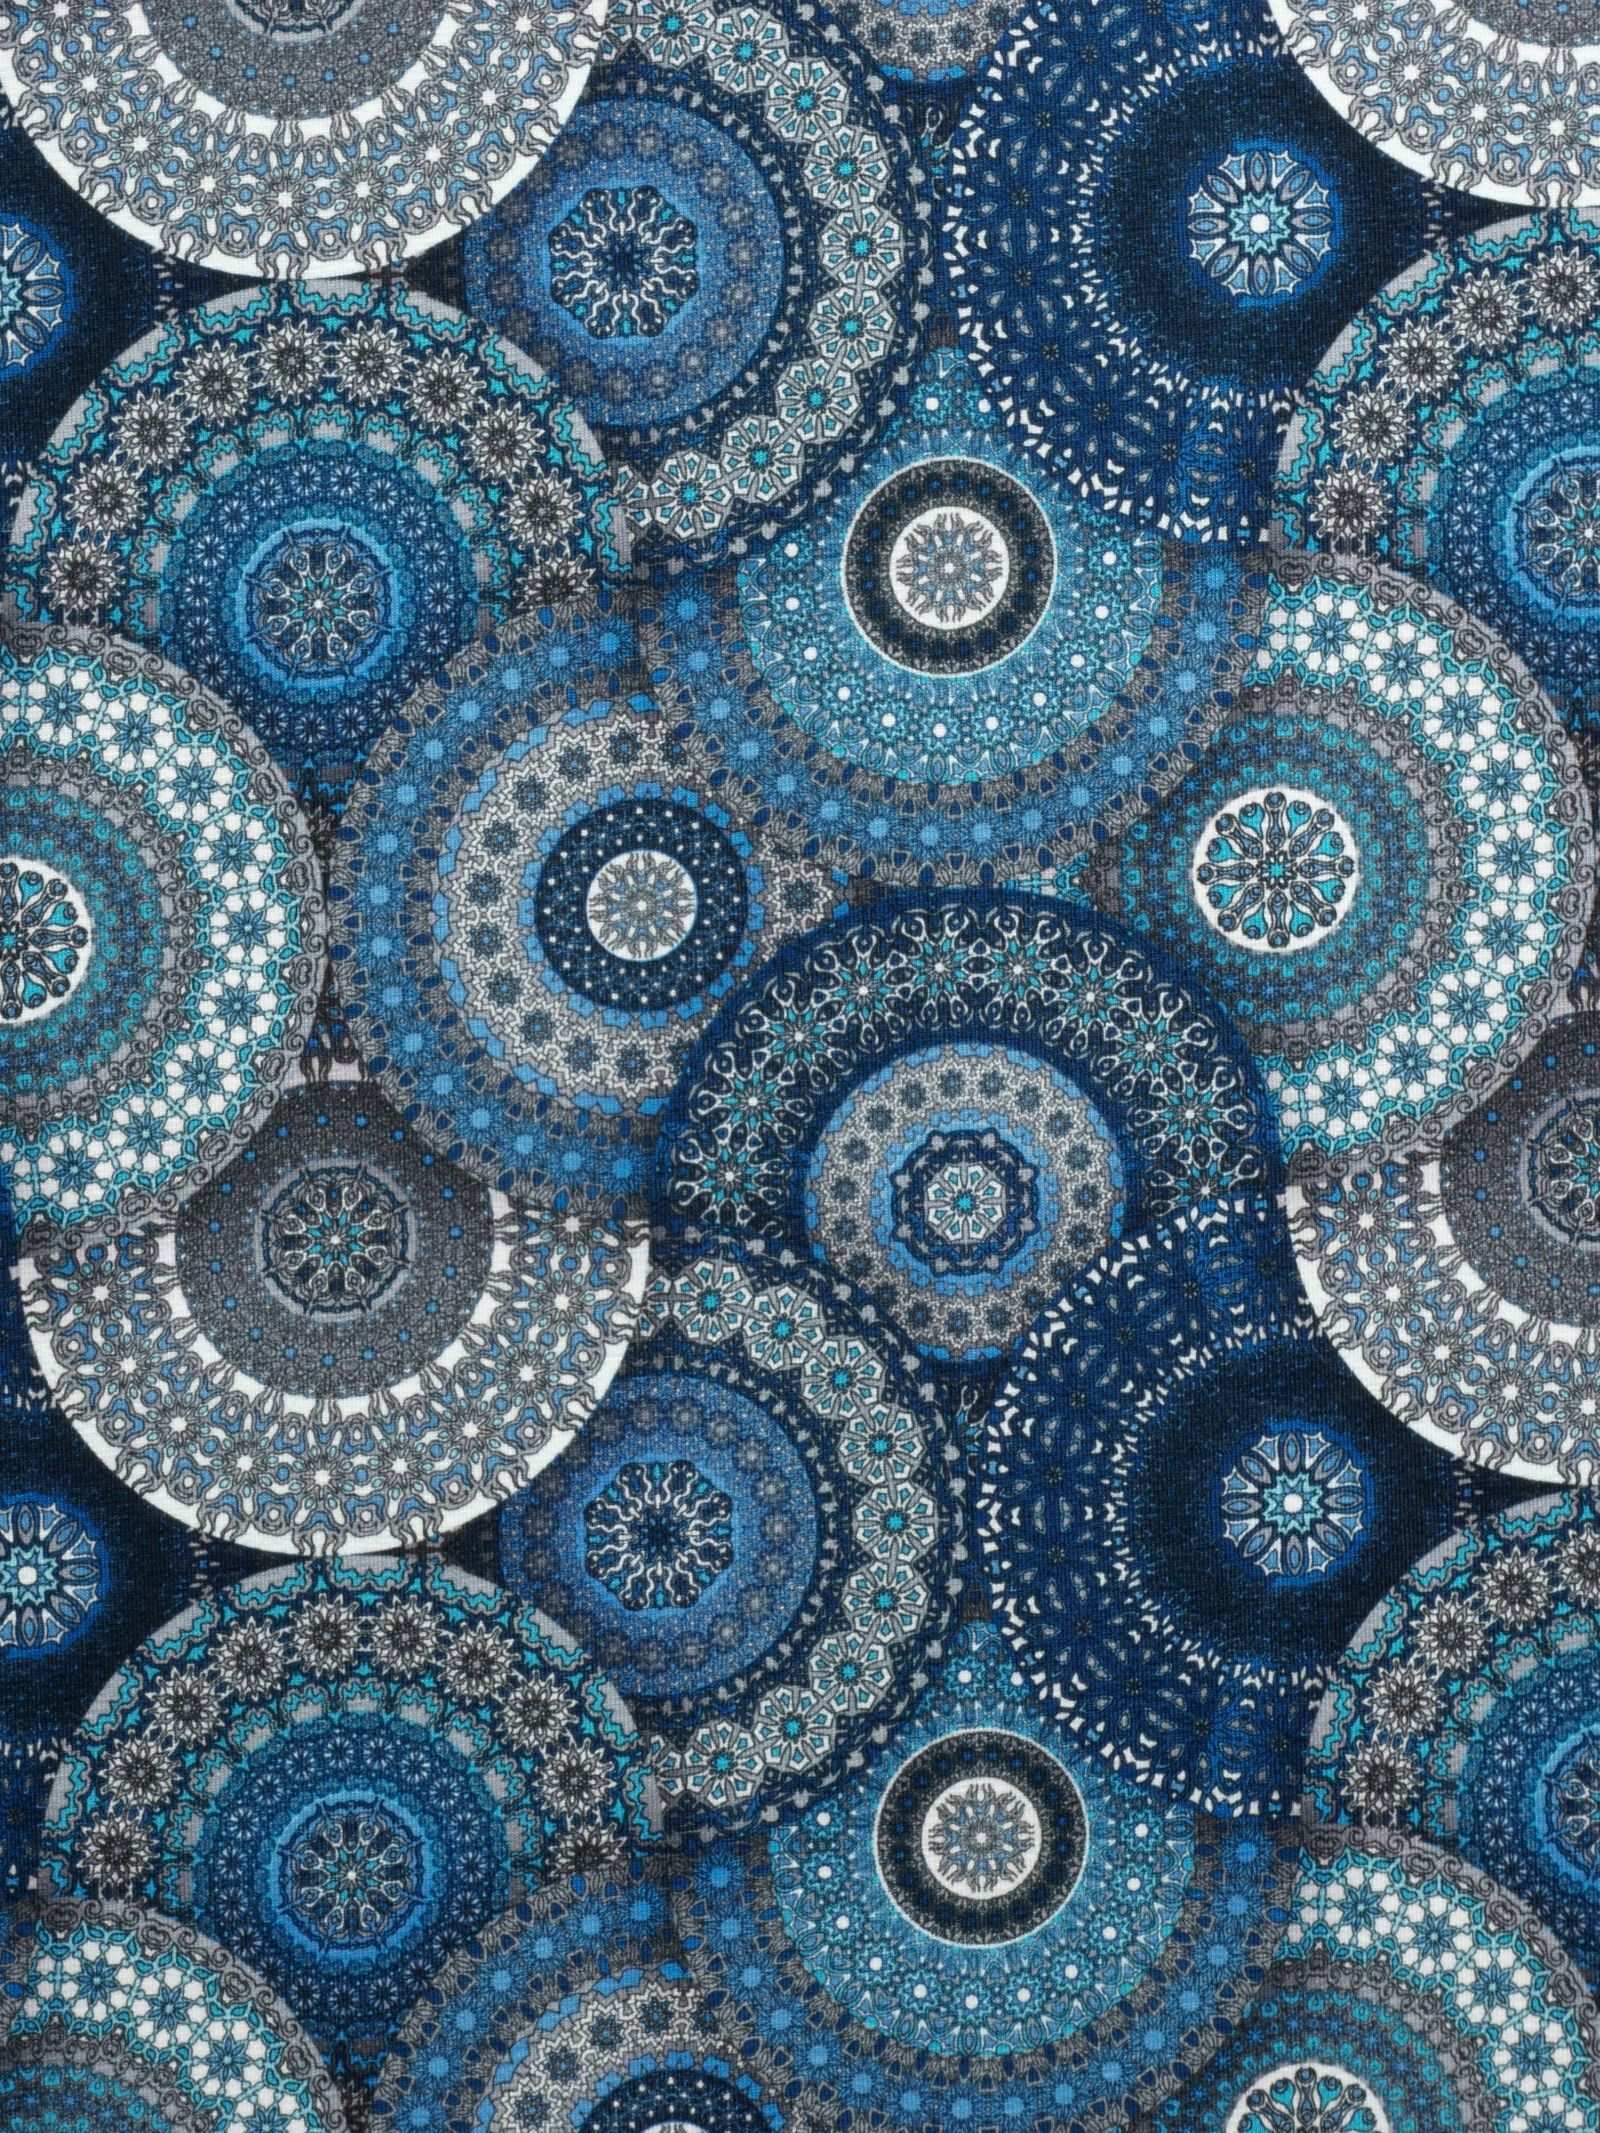 Jersey Stoff Blaue Mandalas Mandala Orientalisch Mystisch Meditation Mandala Quilts Decor